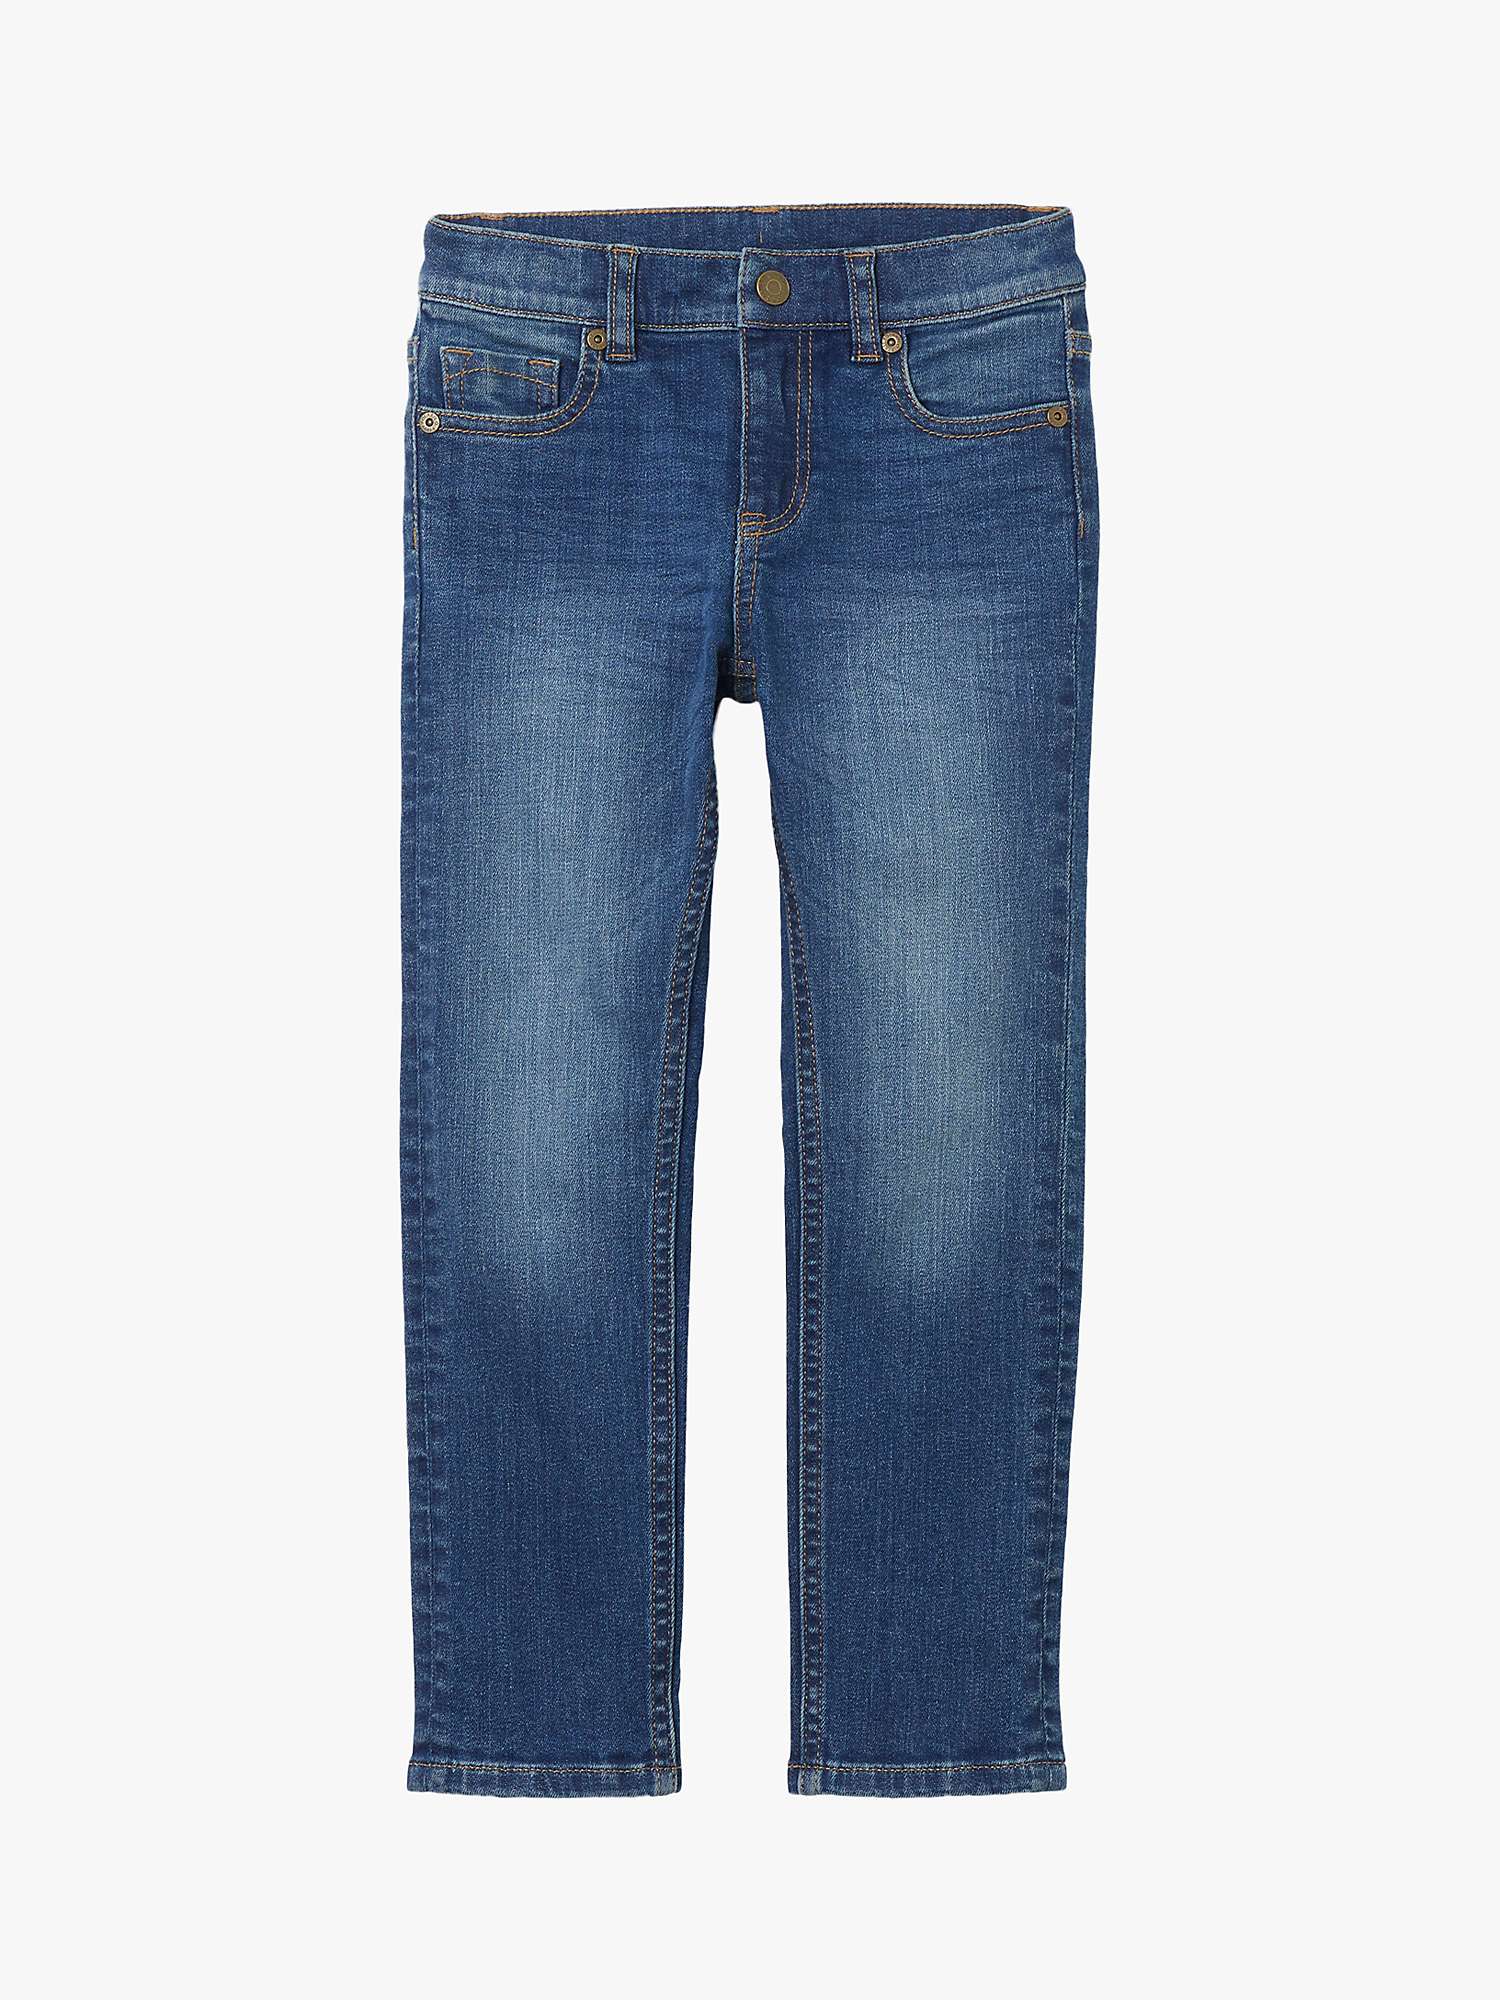 Buy Polarn O. Pyret Kids' GOTS Organic Cotton Slim Jeans, Blue Online at johnlewis.com